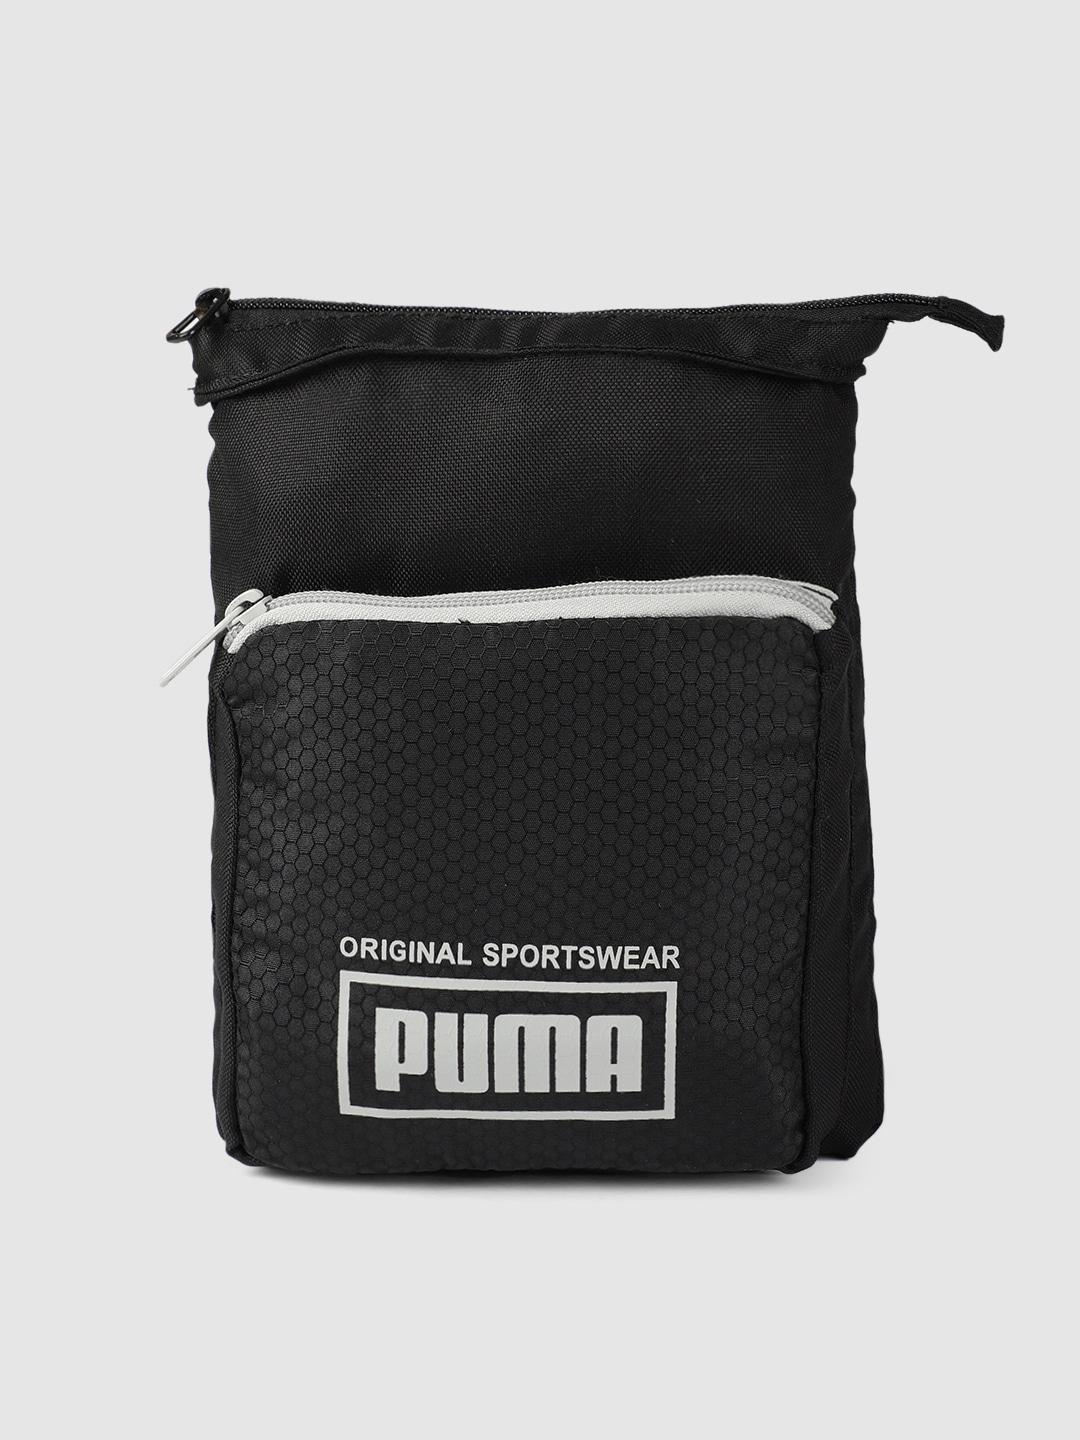 puma-black-solid-sole-portable-messenger-bag